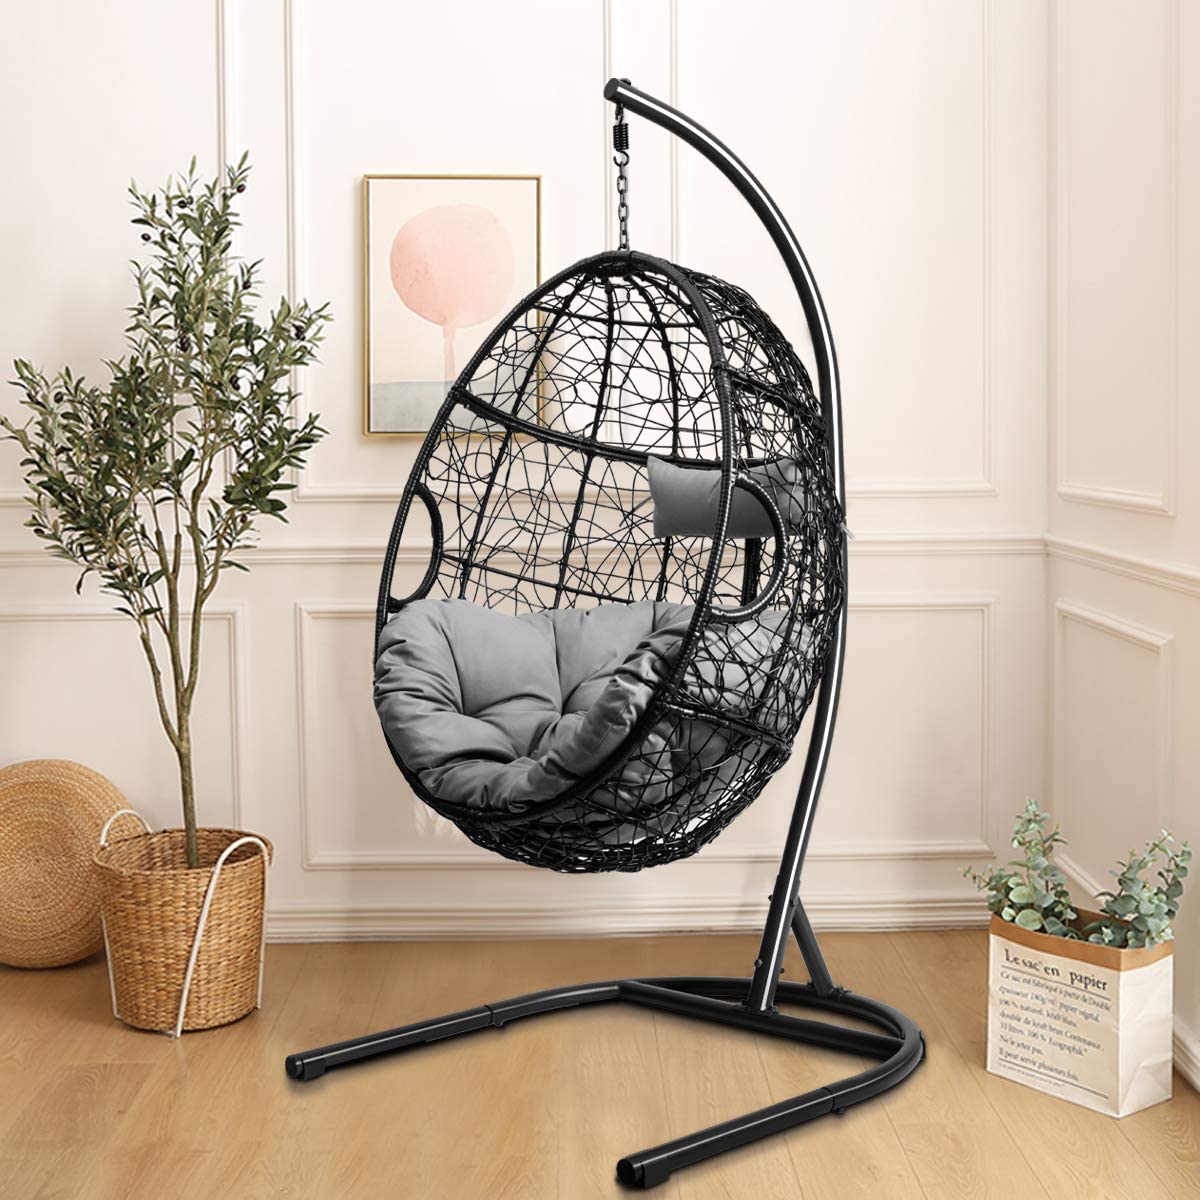 Hanging Egg Chair - Giantex